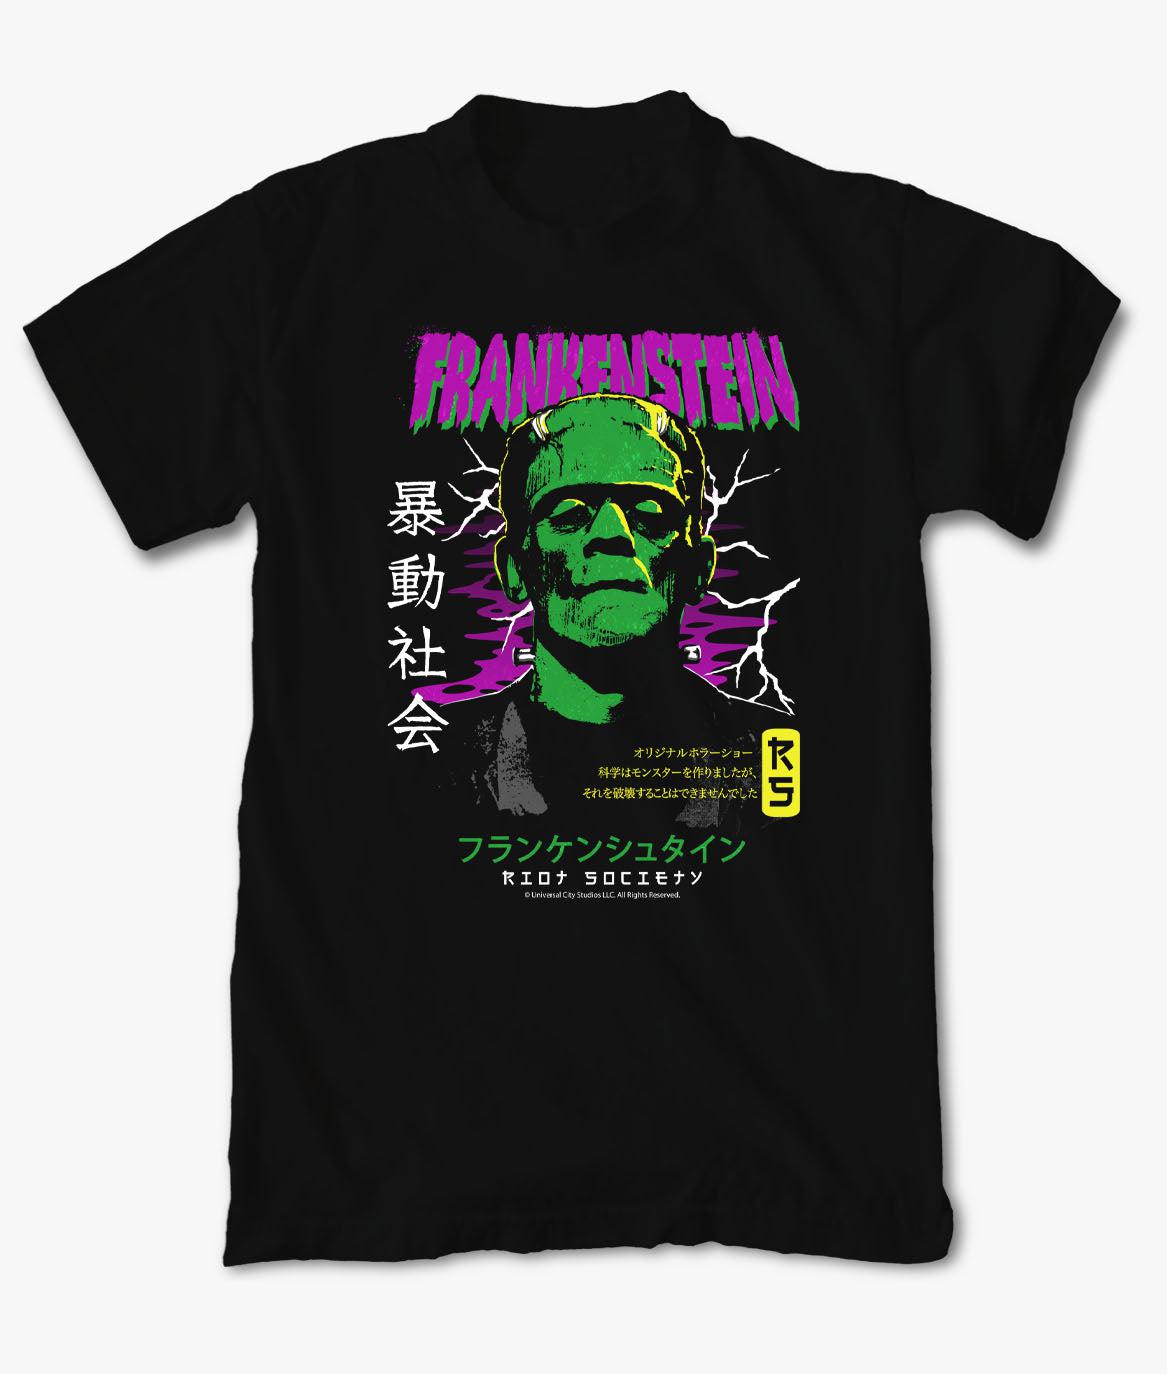 Frankenstein Kanji Boys Tee - S - Riot Society